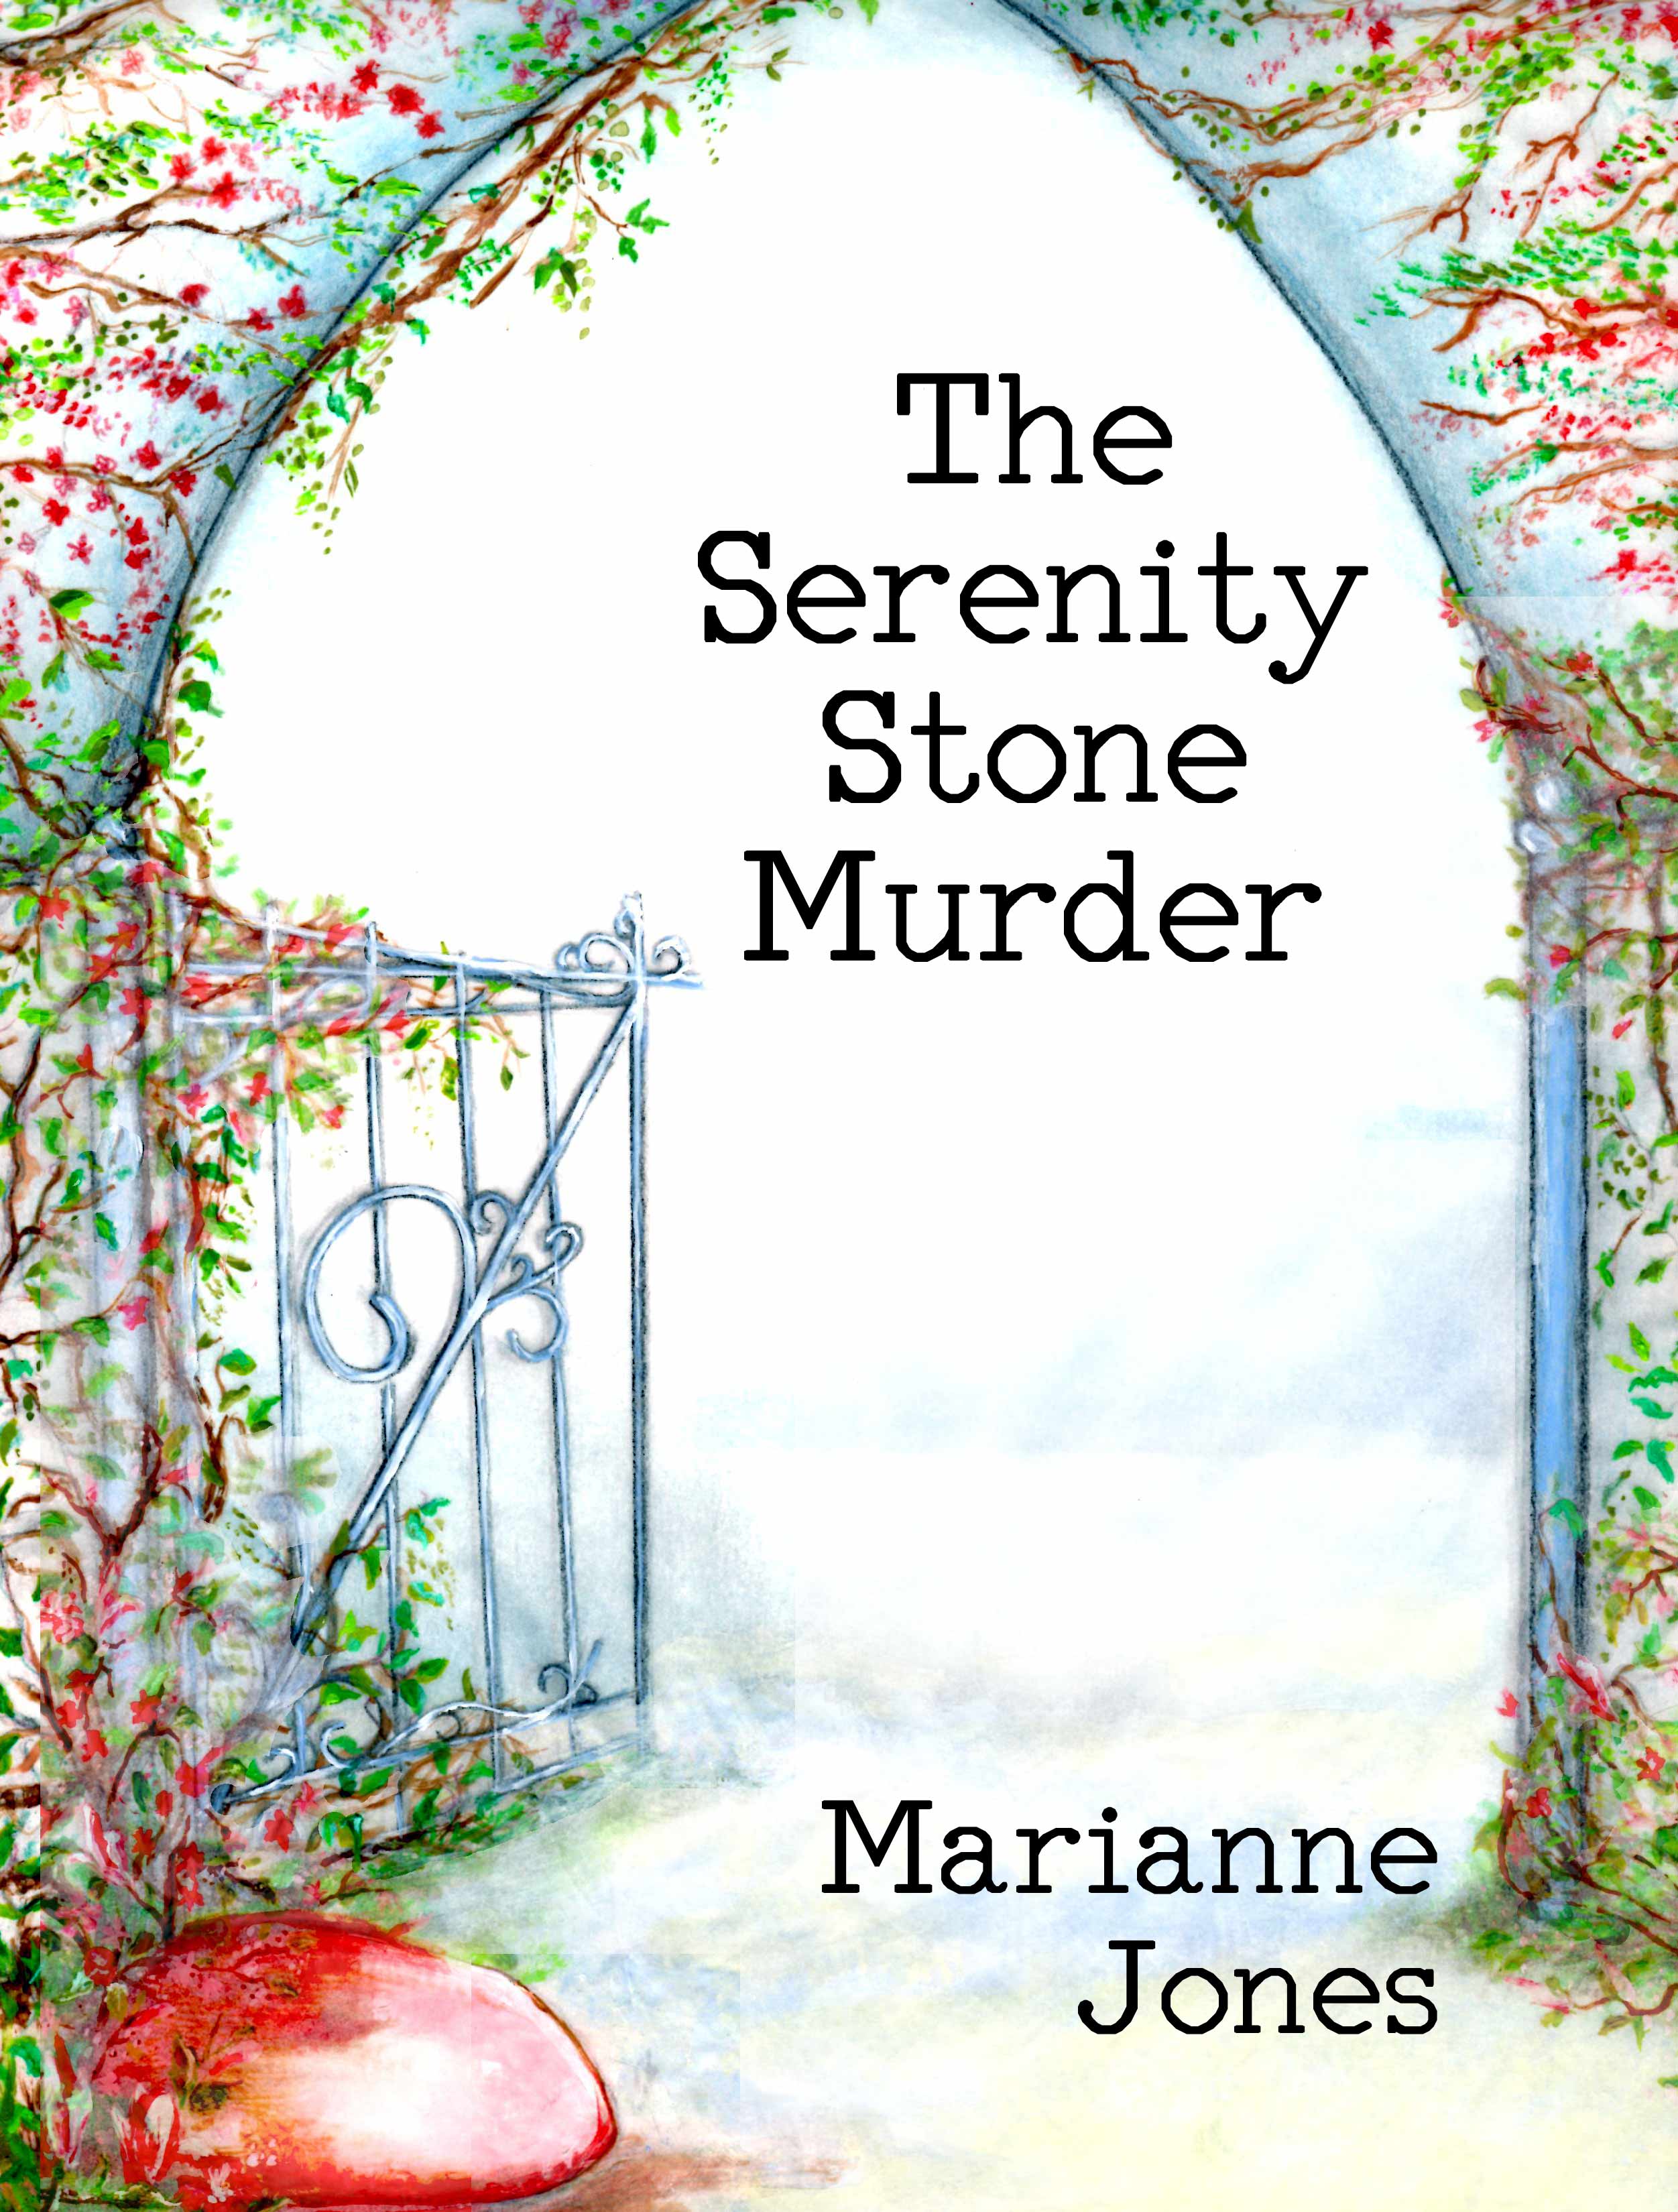 FREE: The Serenity Stone Murder by Marianne Jones